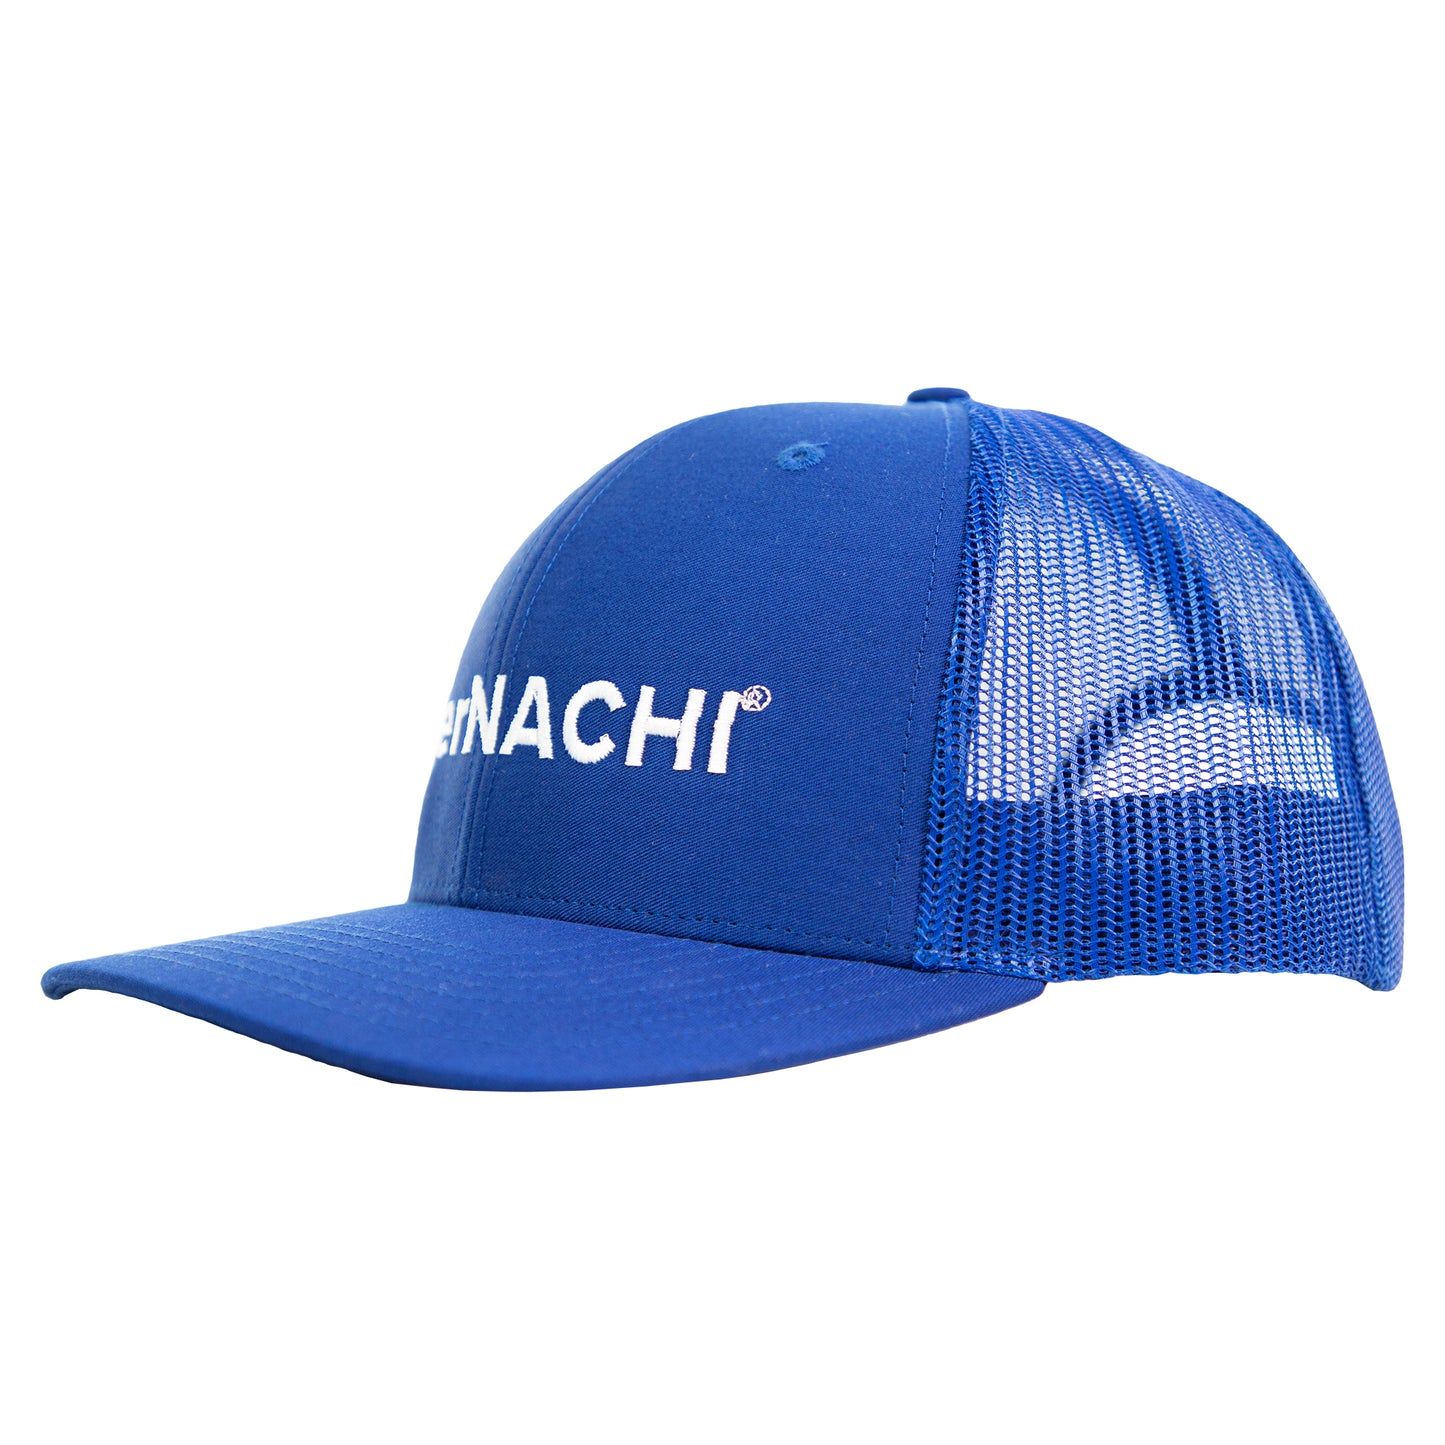 InterNACHI® Trucker Cap